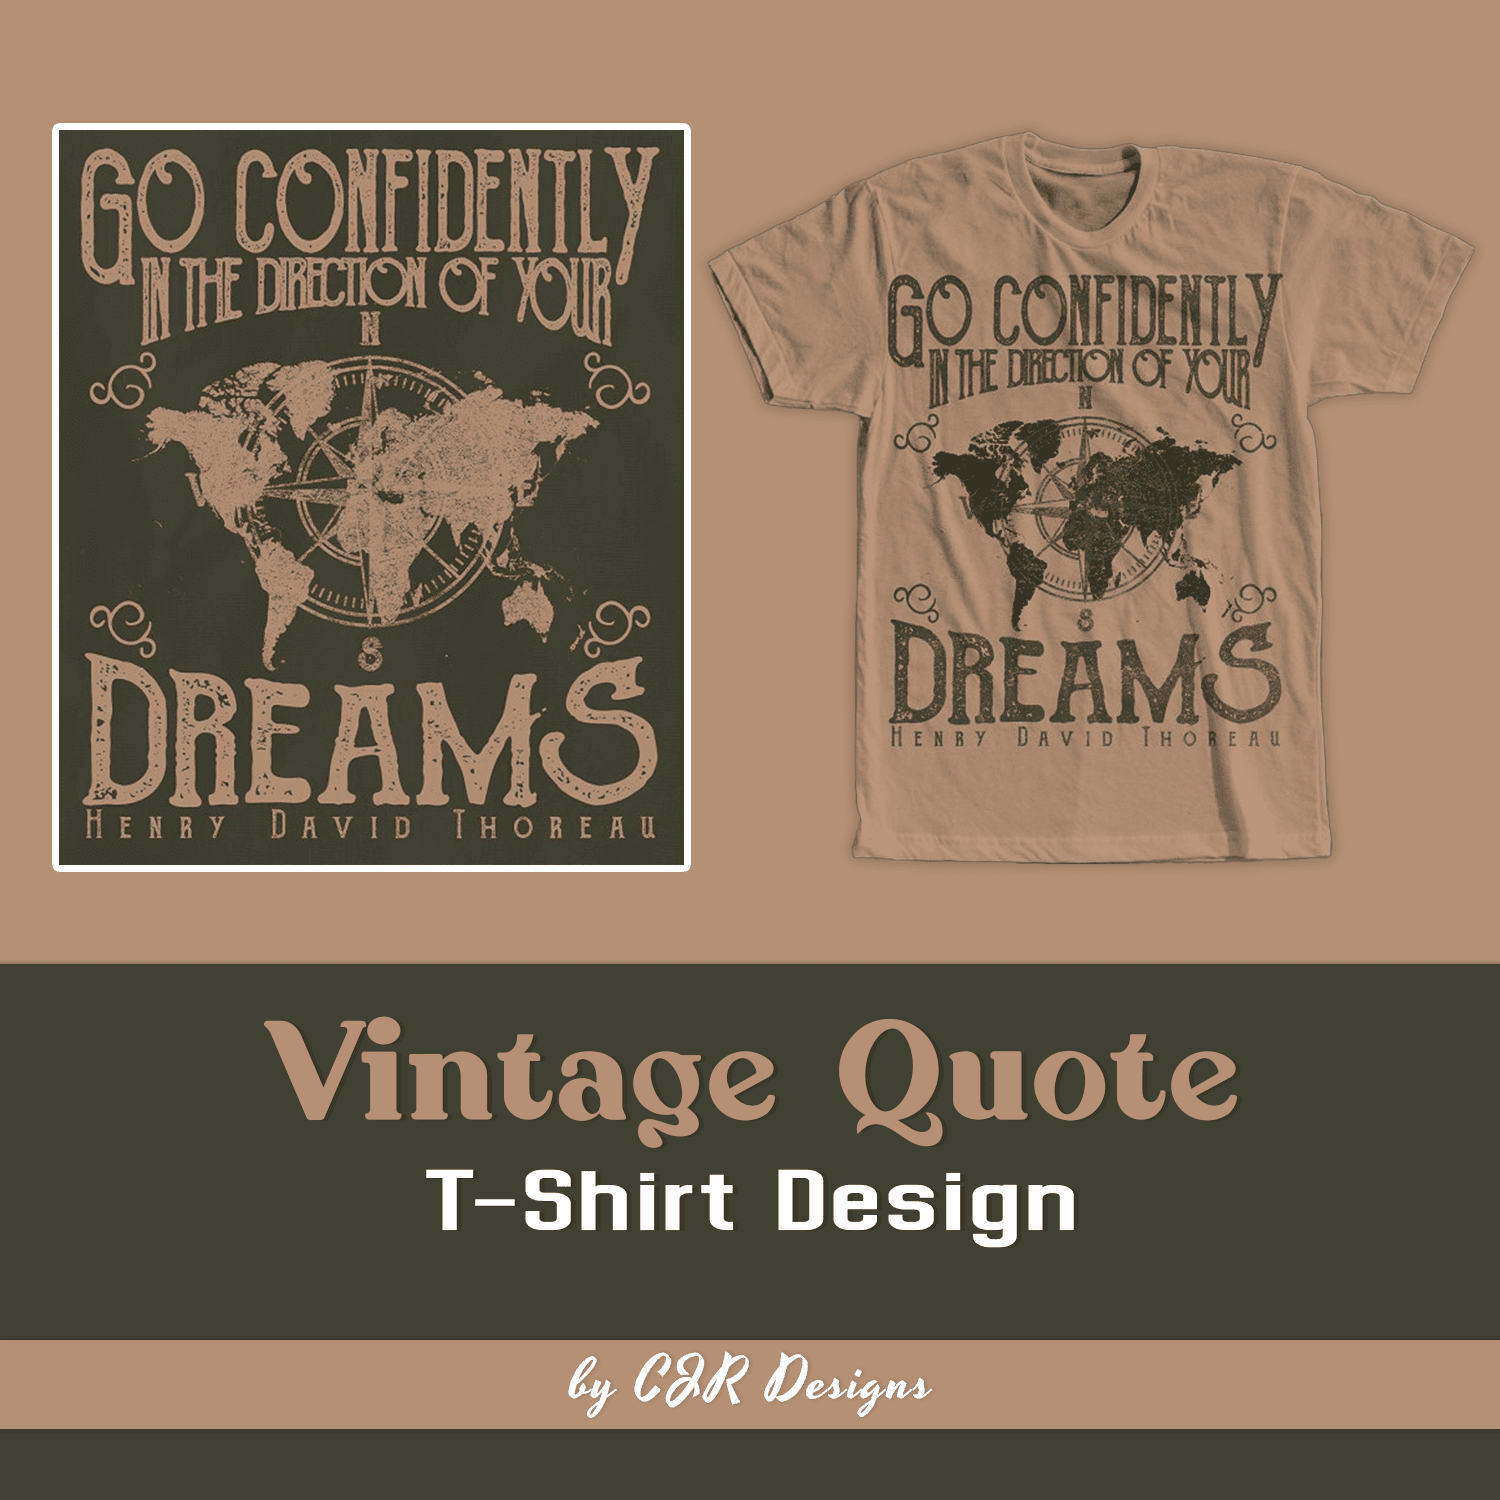 Vintage Quote T-Shirt Design cover.